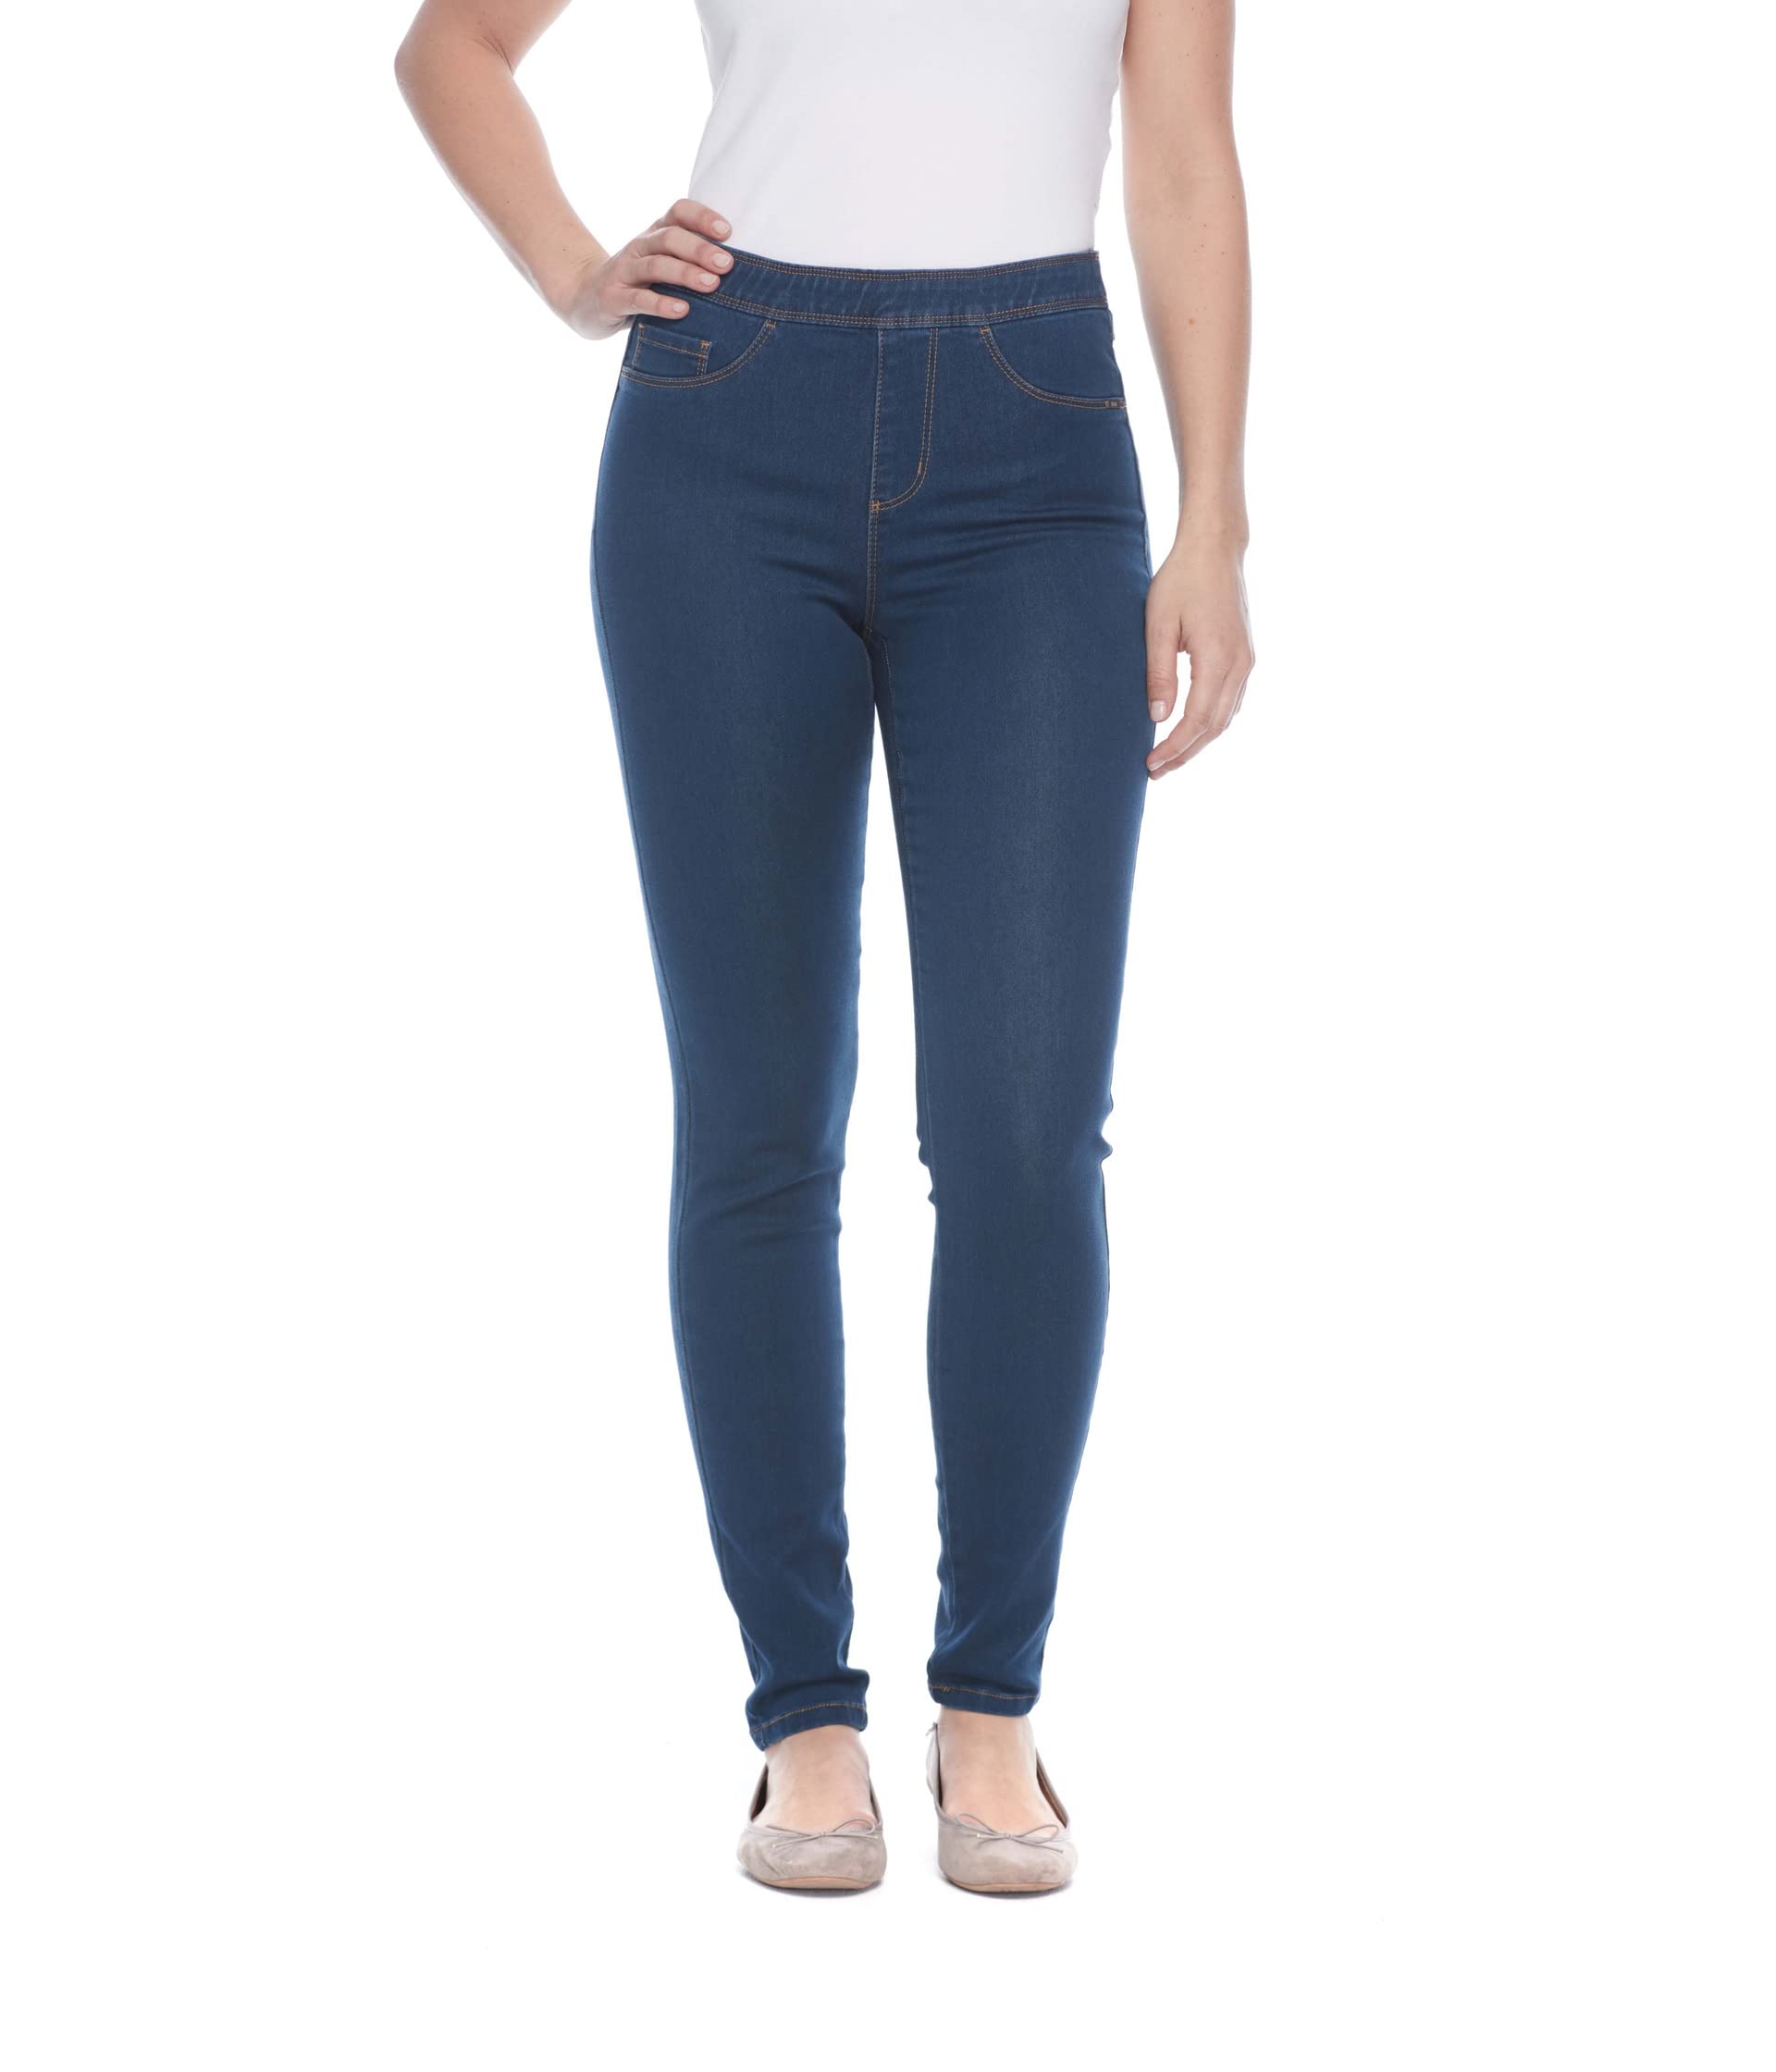 Узкие брюки без застежек цвета индиго FDJ French Dressing Jeans